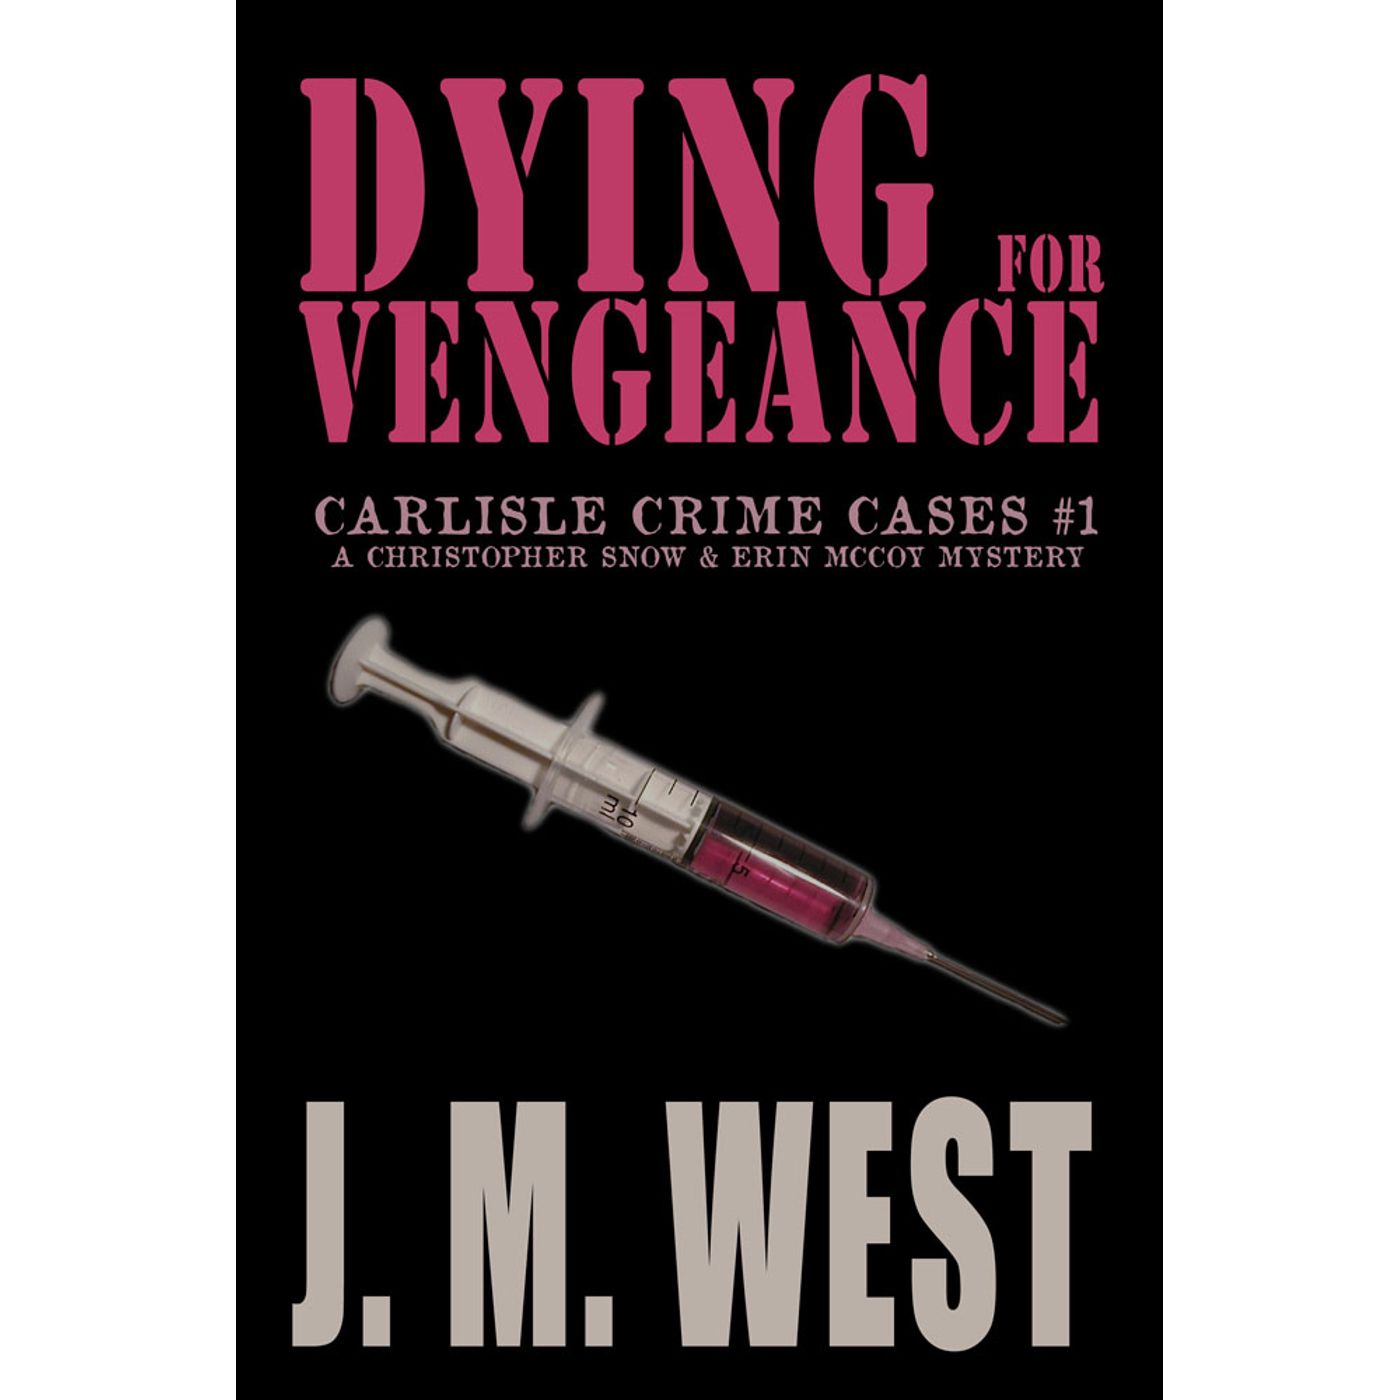 #JCS JM West -- Dying for Vengeance